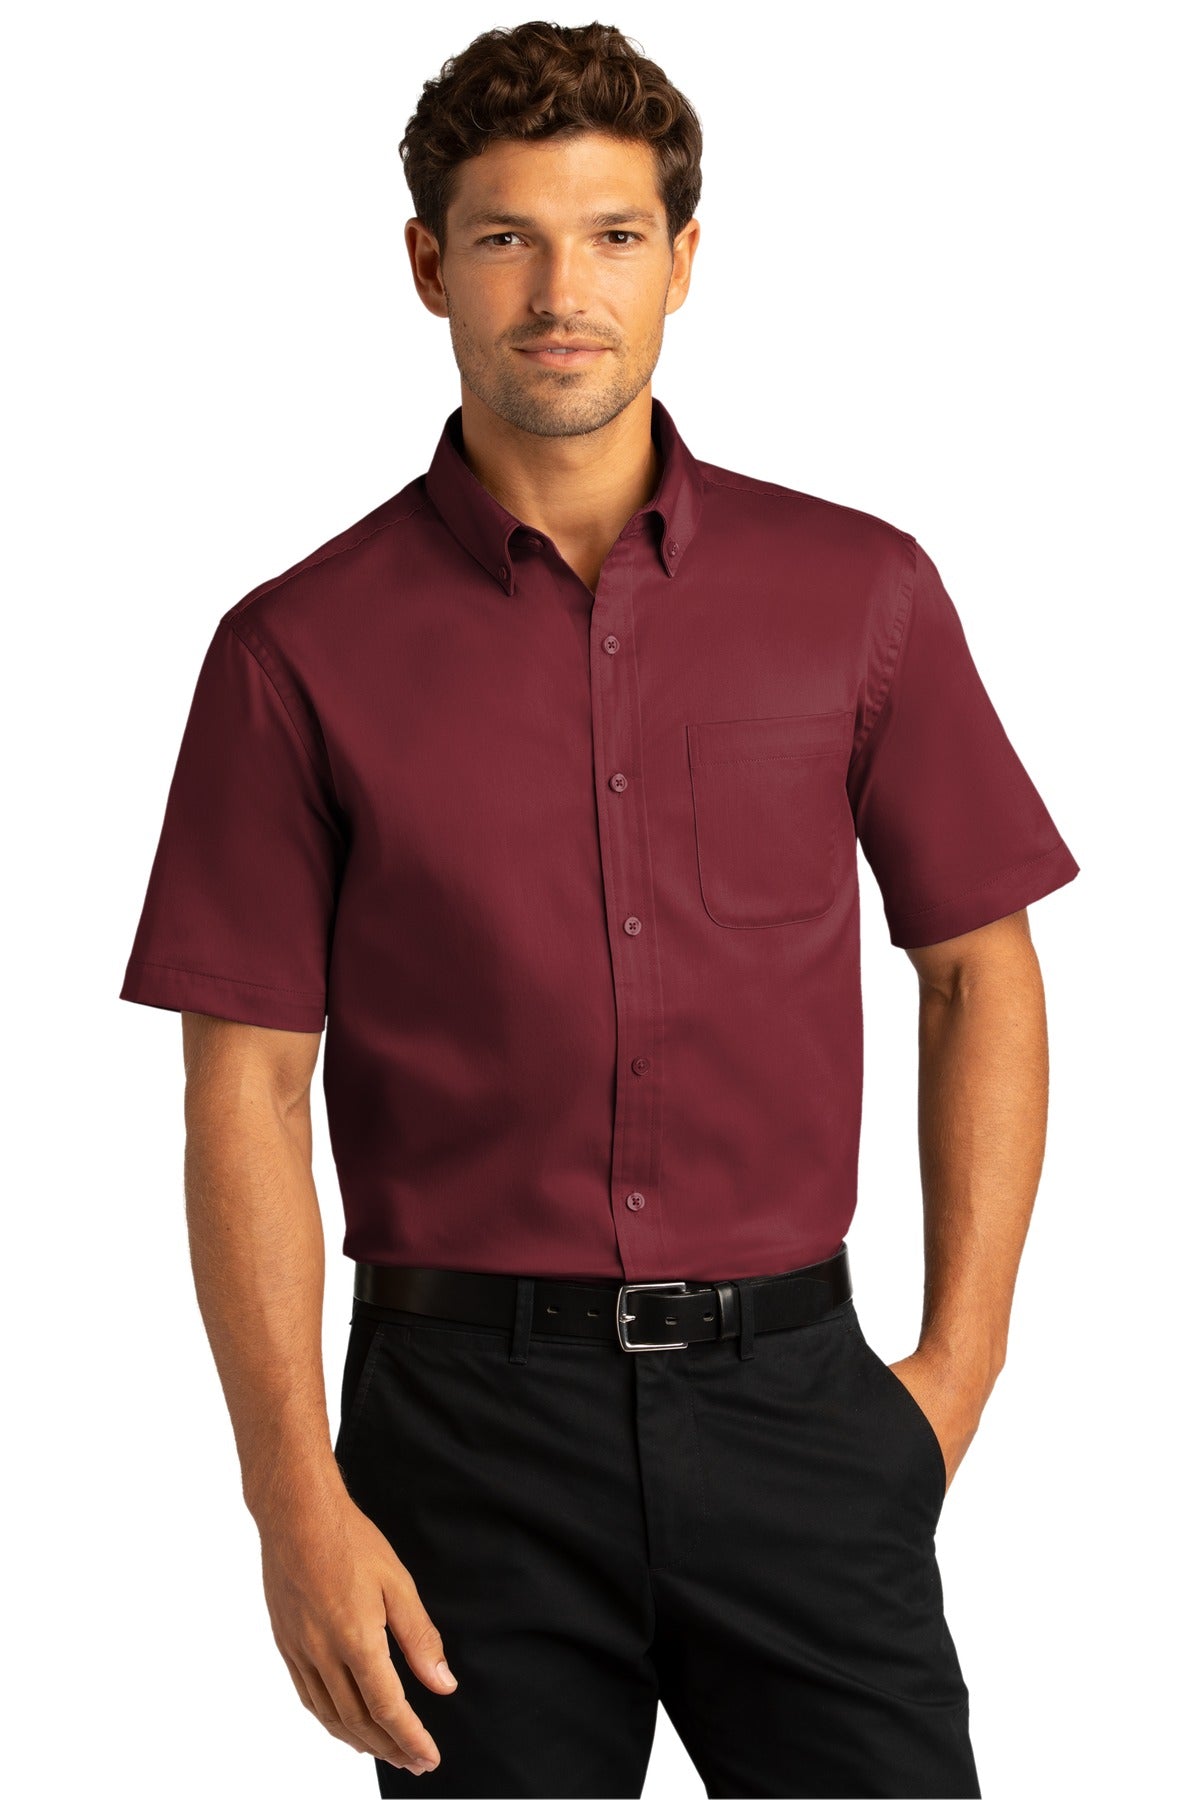 Port Authority® Short Sleeve SuperPro React™ Twill Shirt. W809 [Burgundy] - DFW Impression